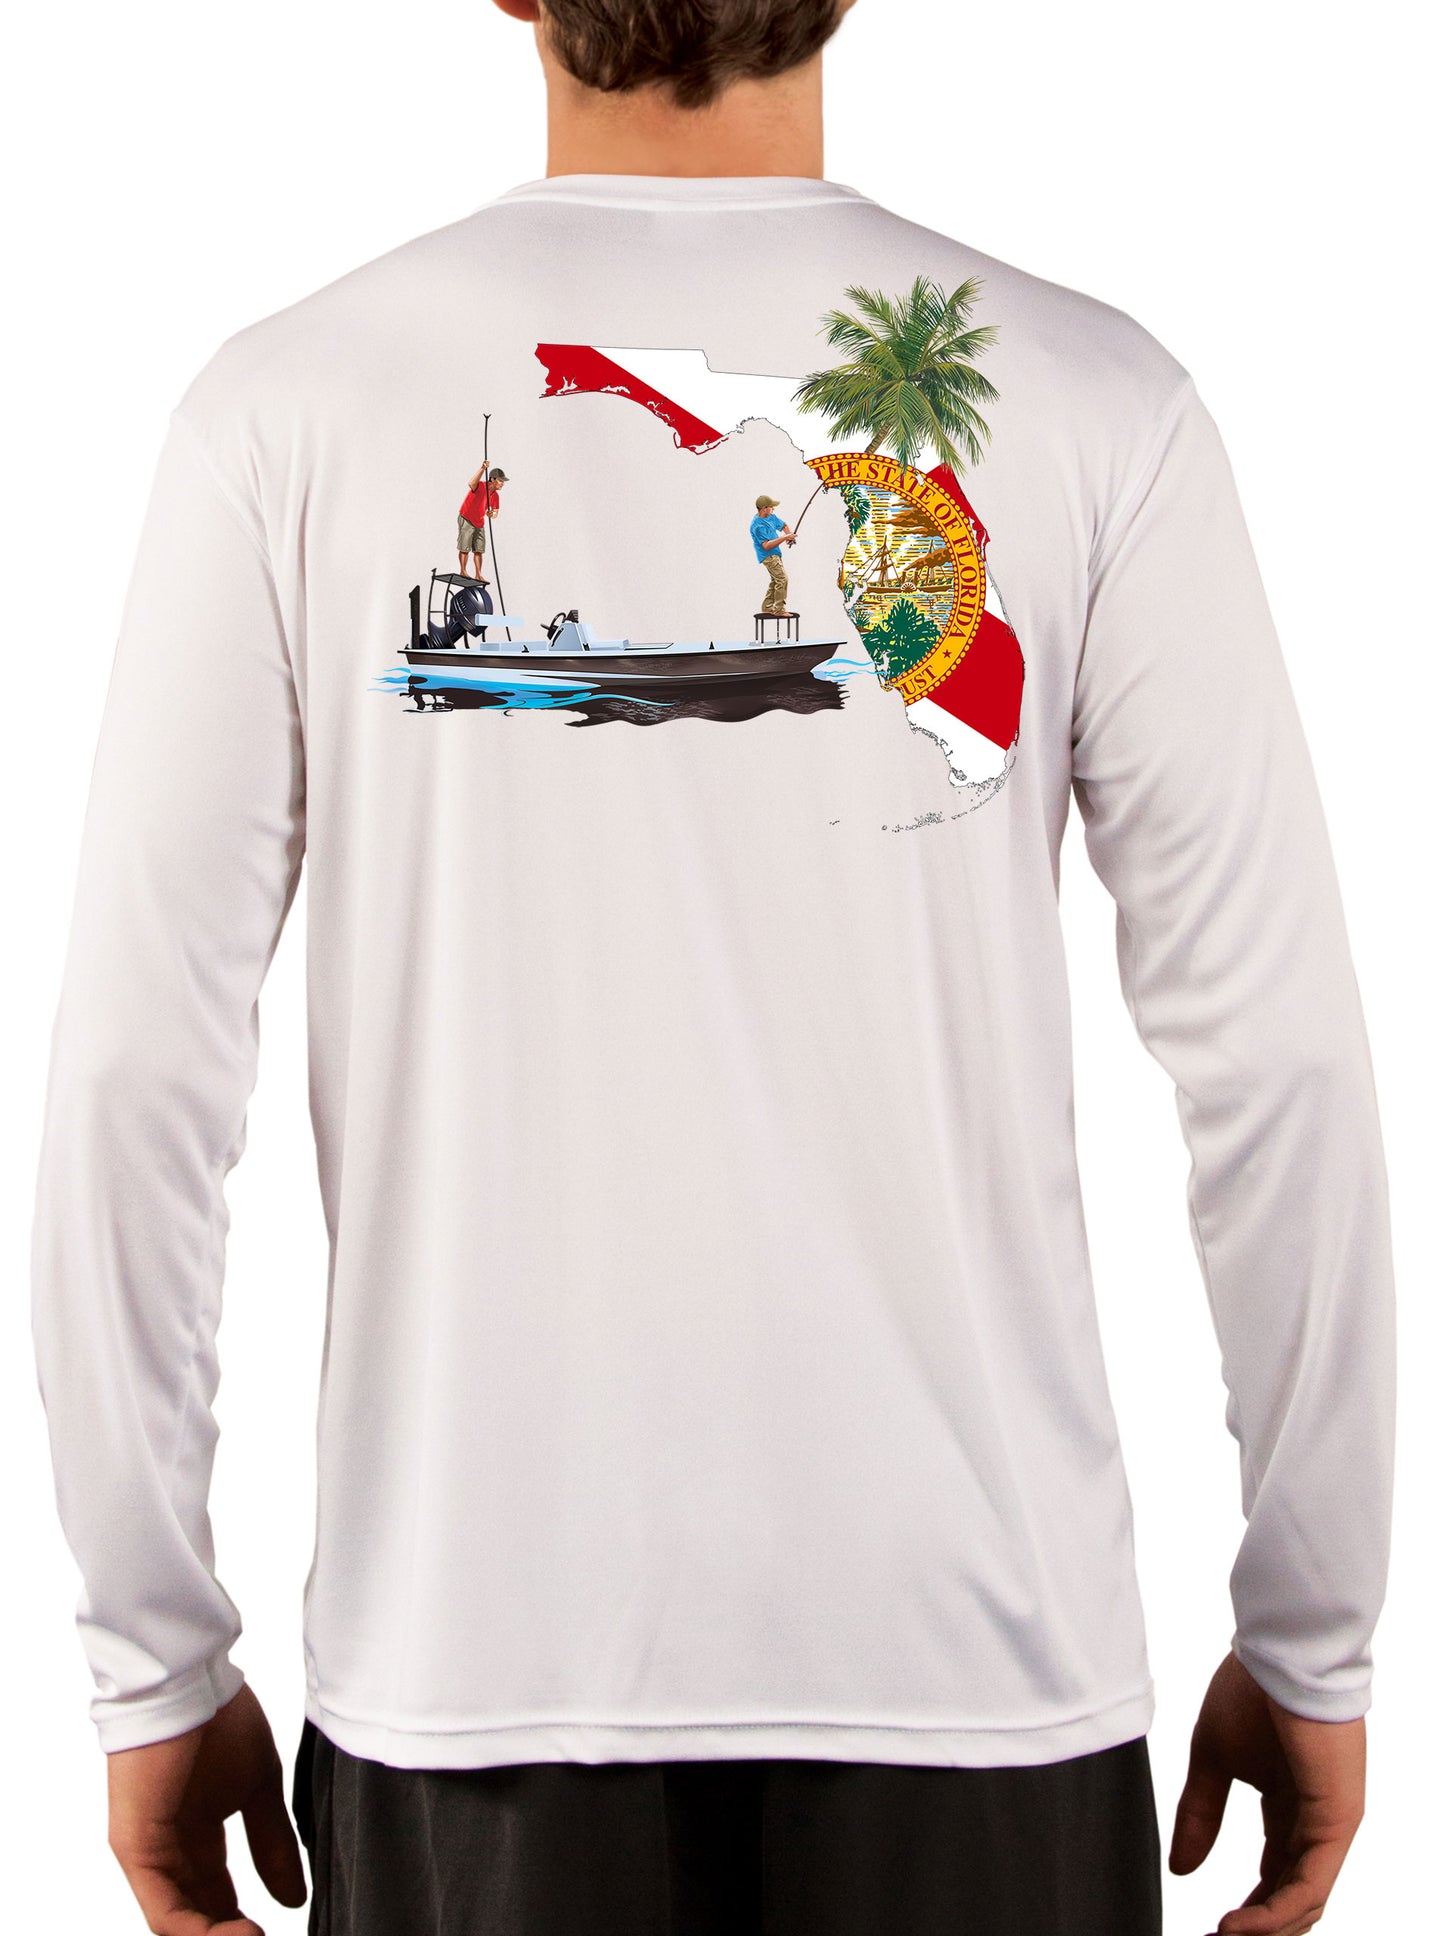 Fishing Shirt Poling Skiff Florida State Flag with Optional Flag Sleeve - Skiff Life